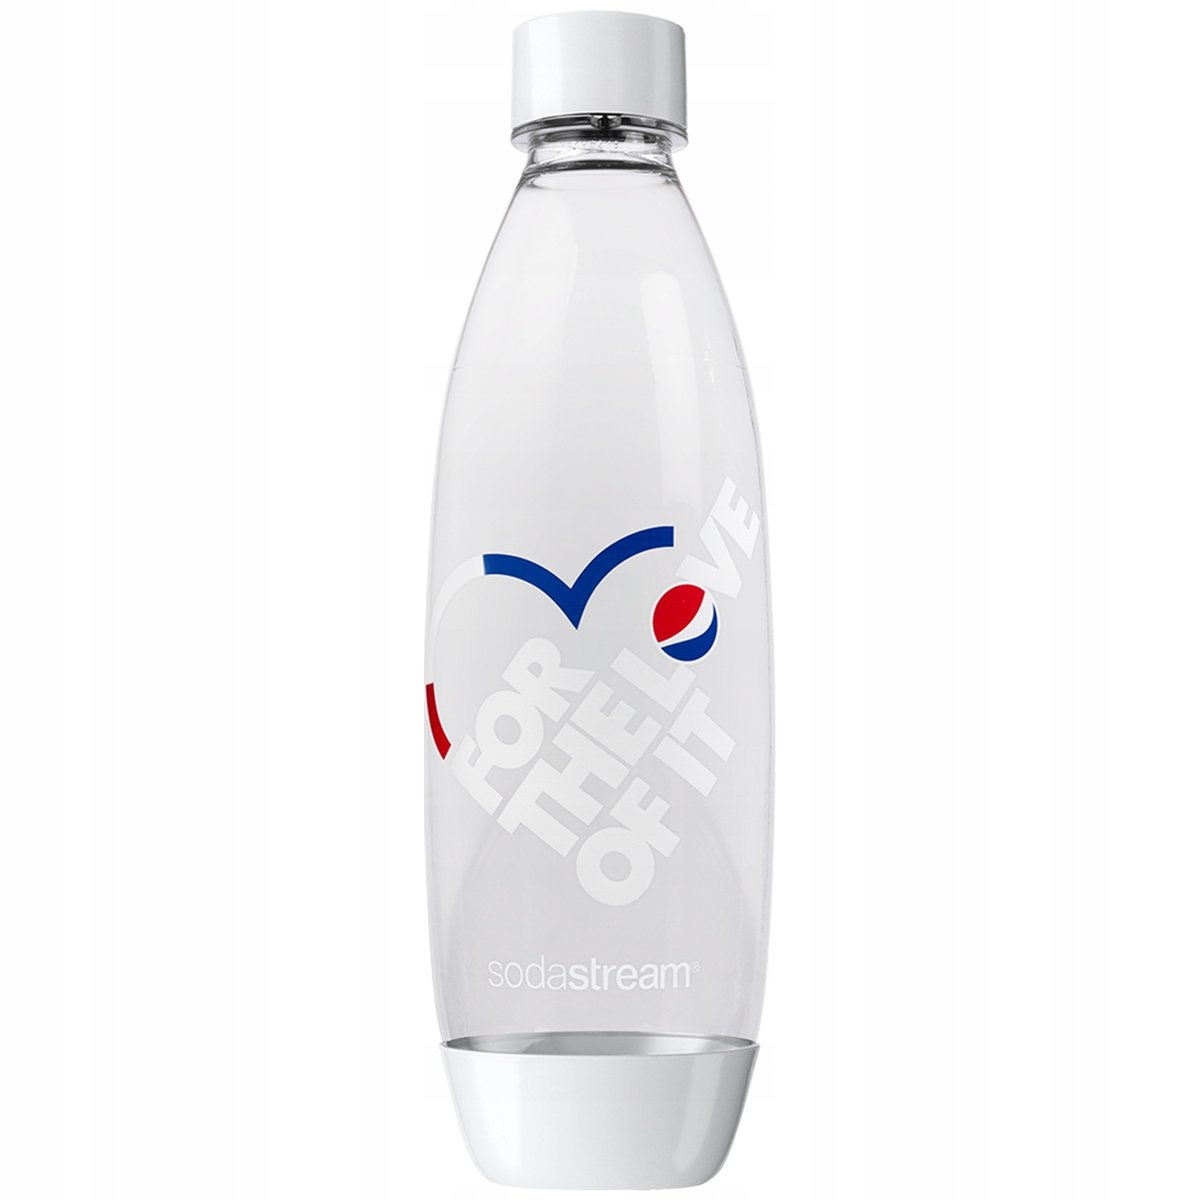 Butelka Do Saturatora Sodastream Fuse Biała Pepsi